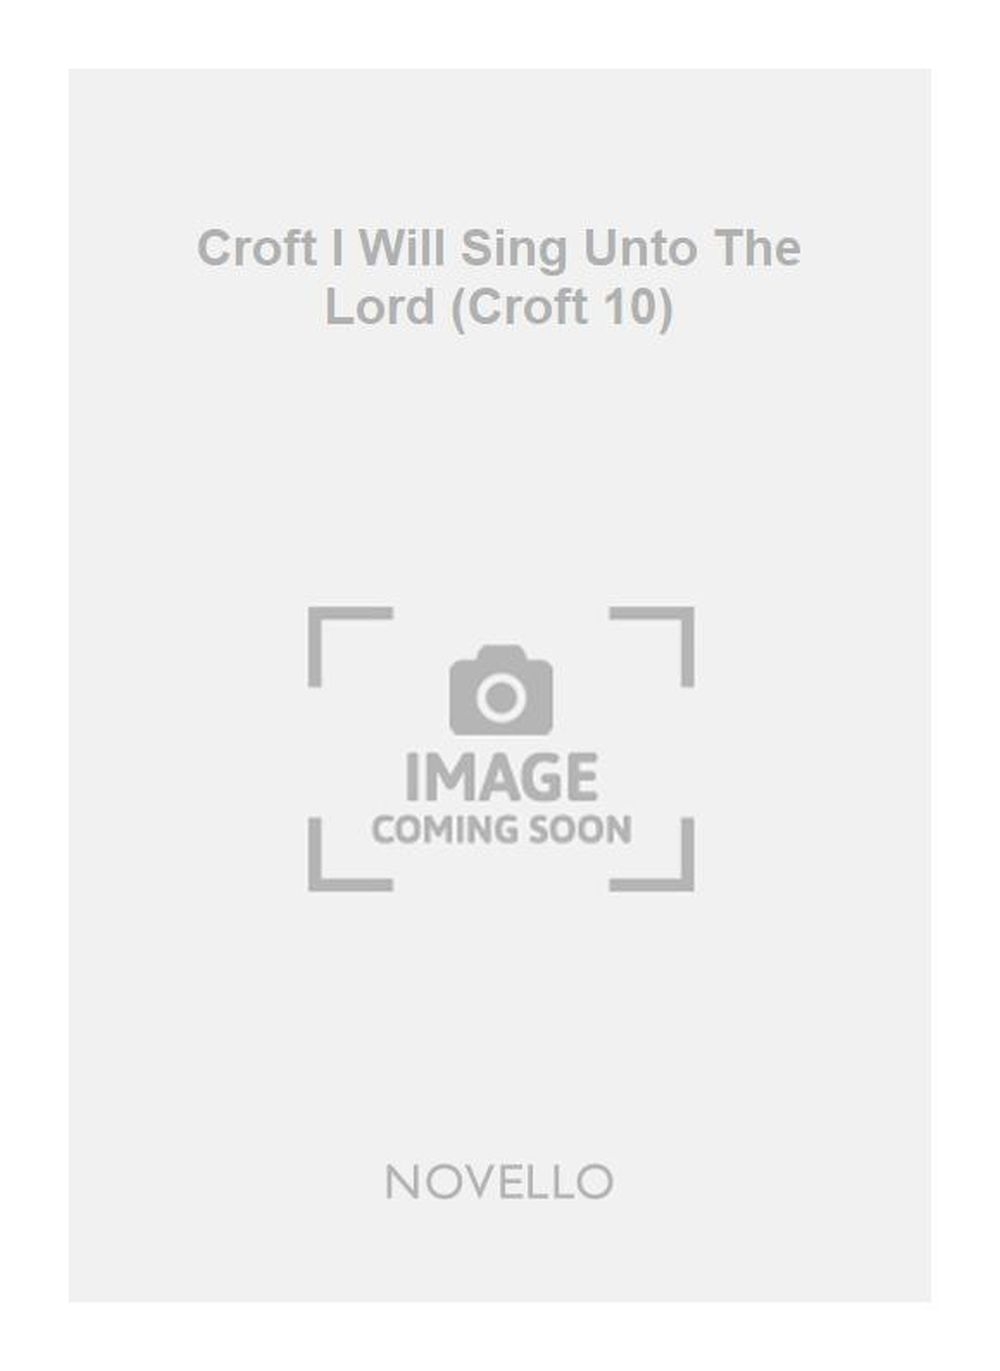 Croft I Will Sing Unto The Lord (Croft 10)